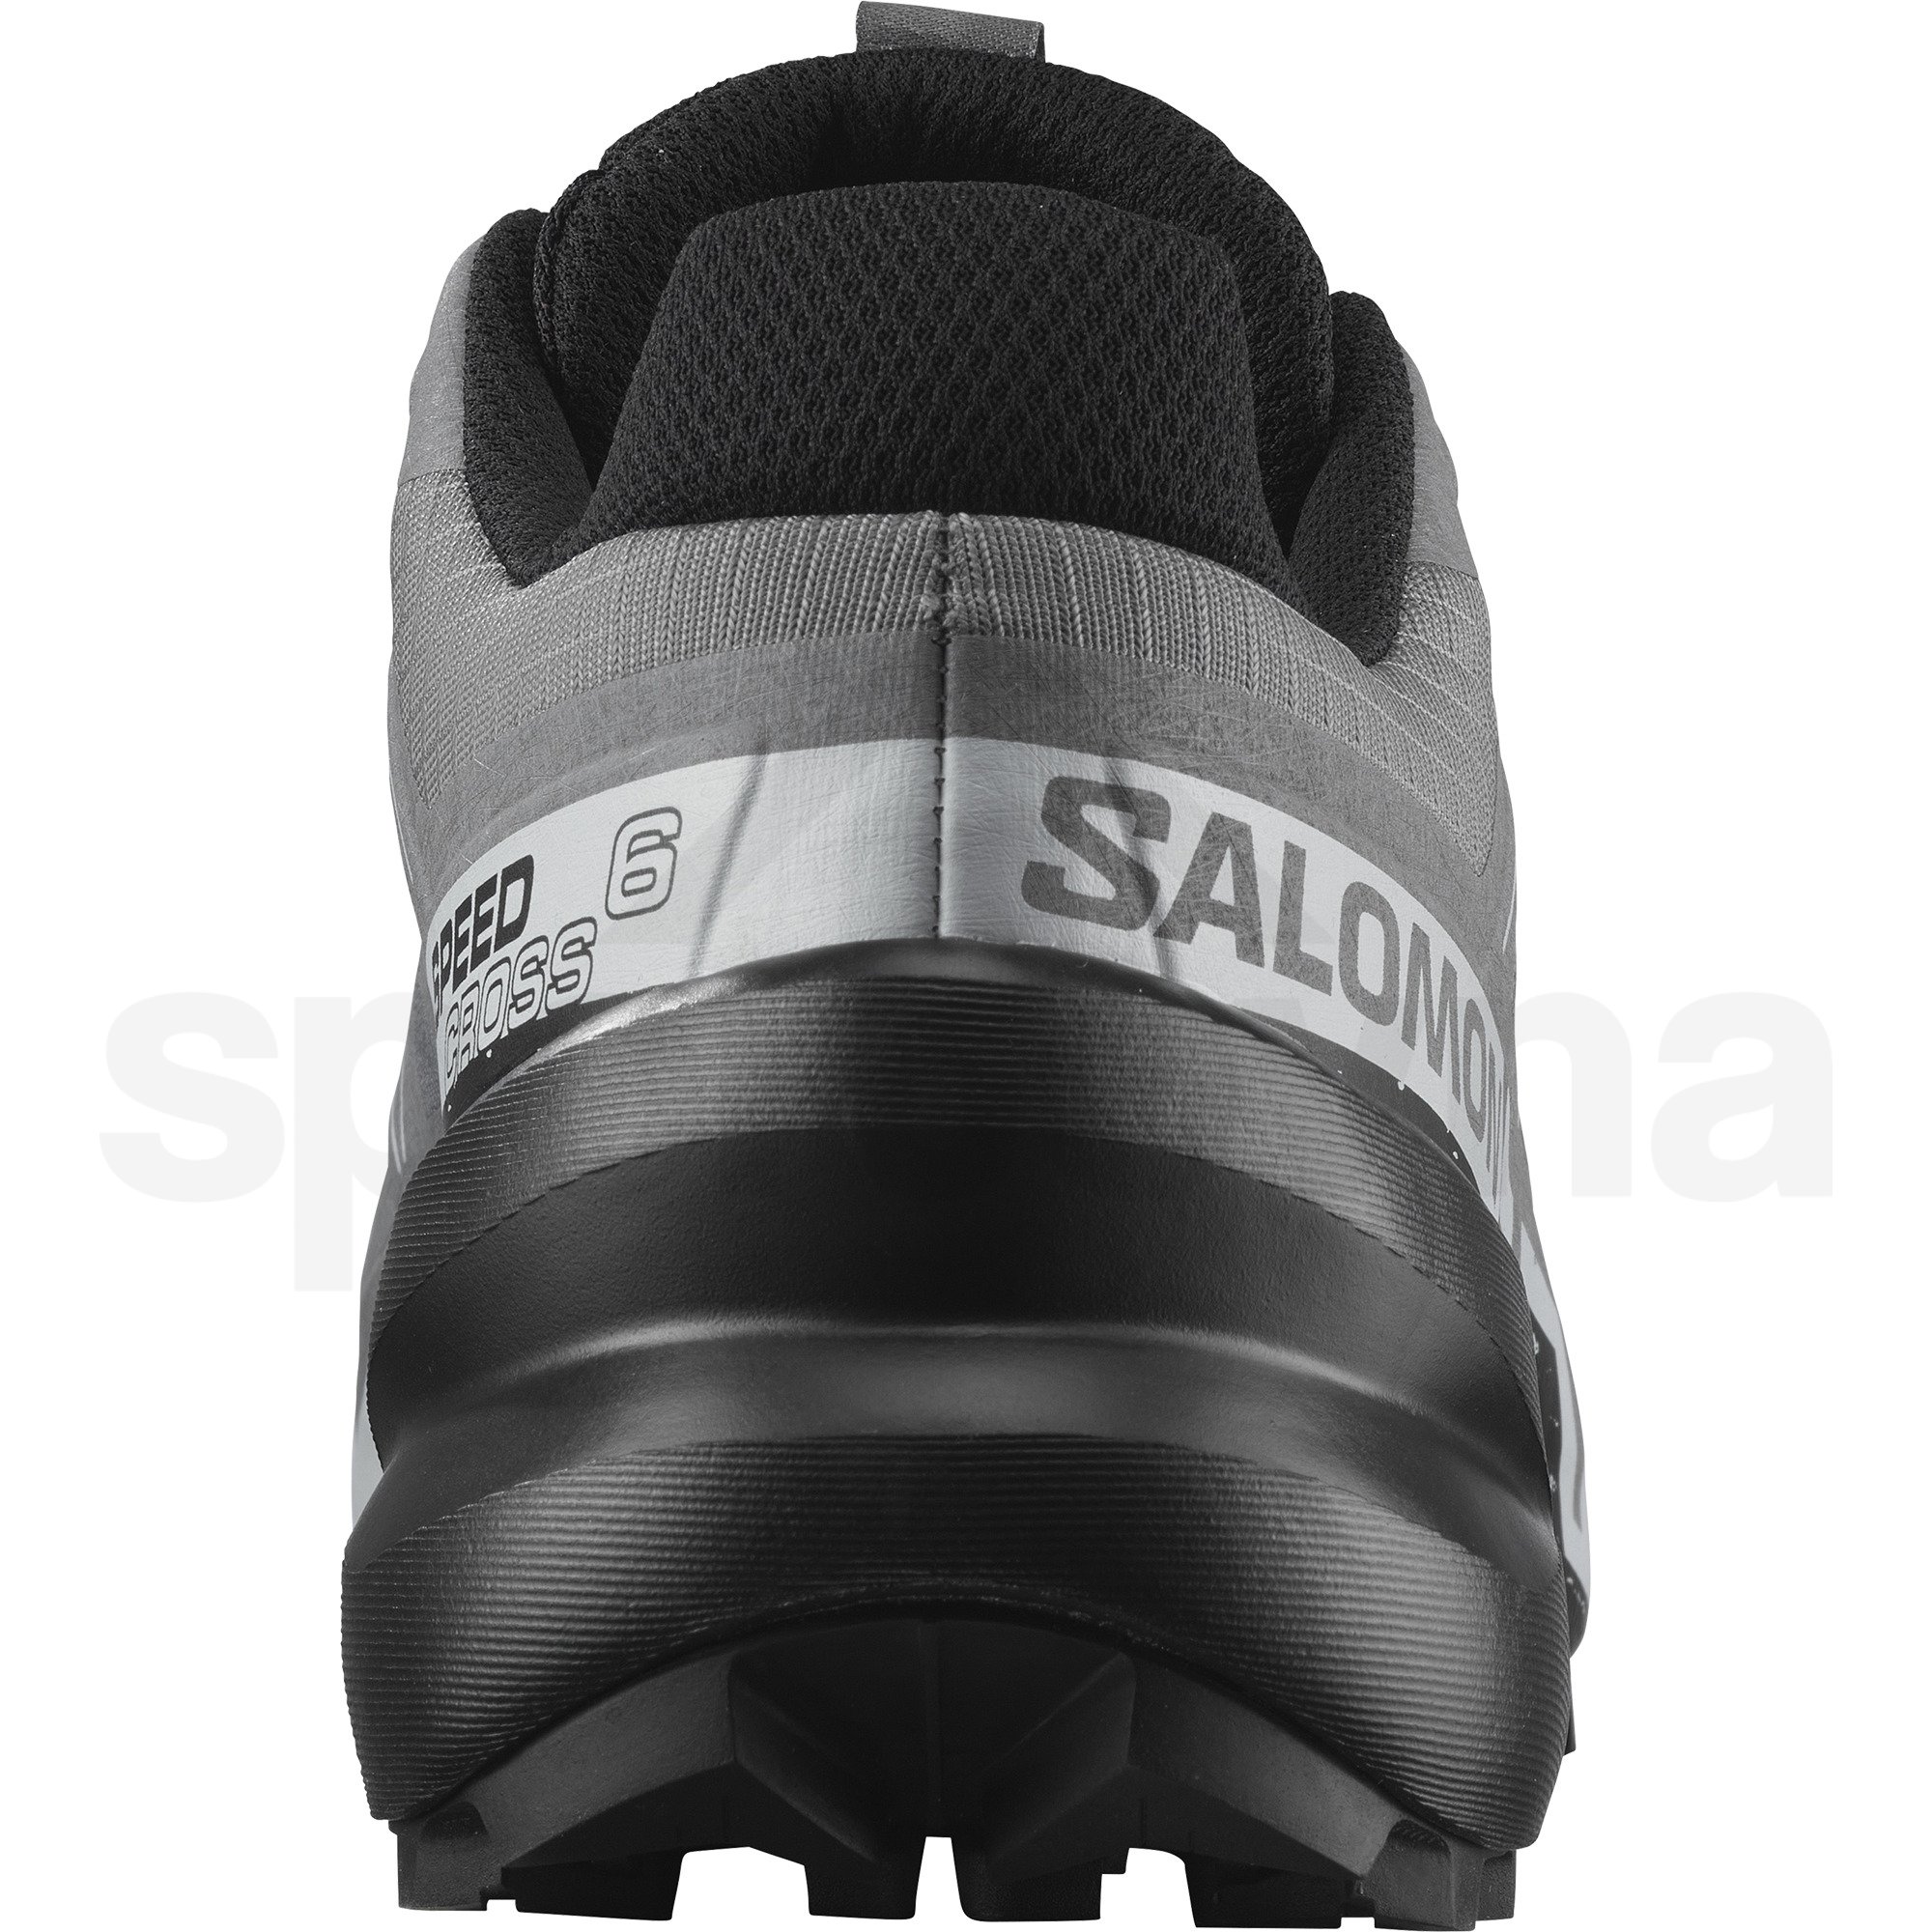 Obuv Salomon Speedcross 6 M - šedá/černá